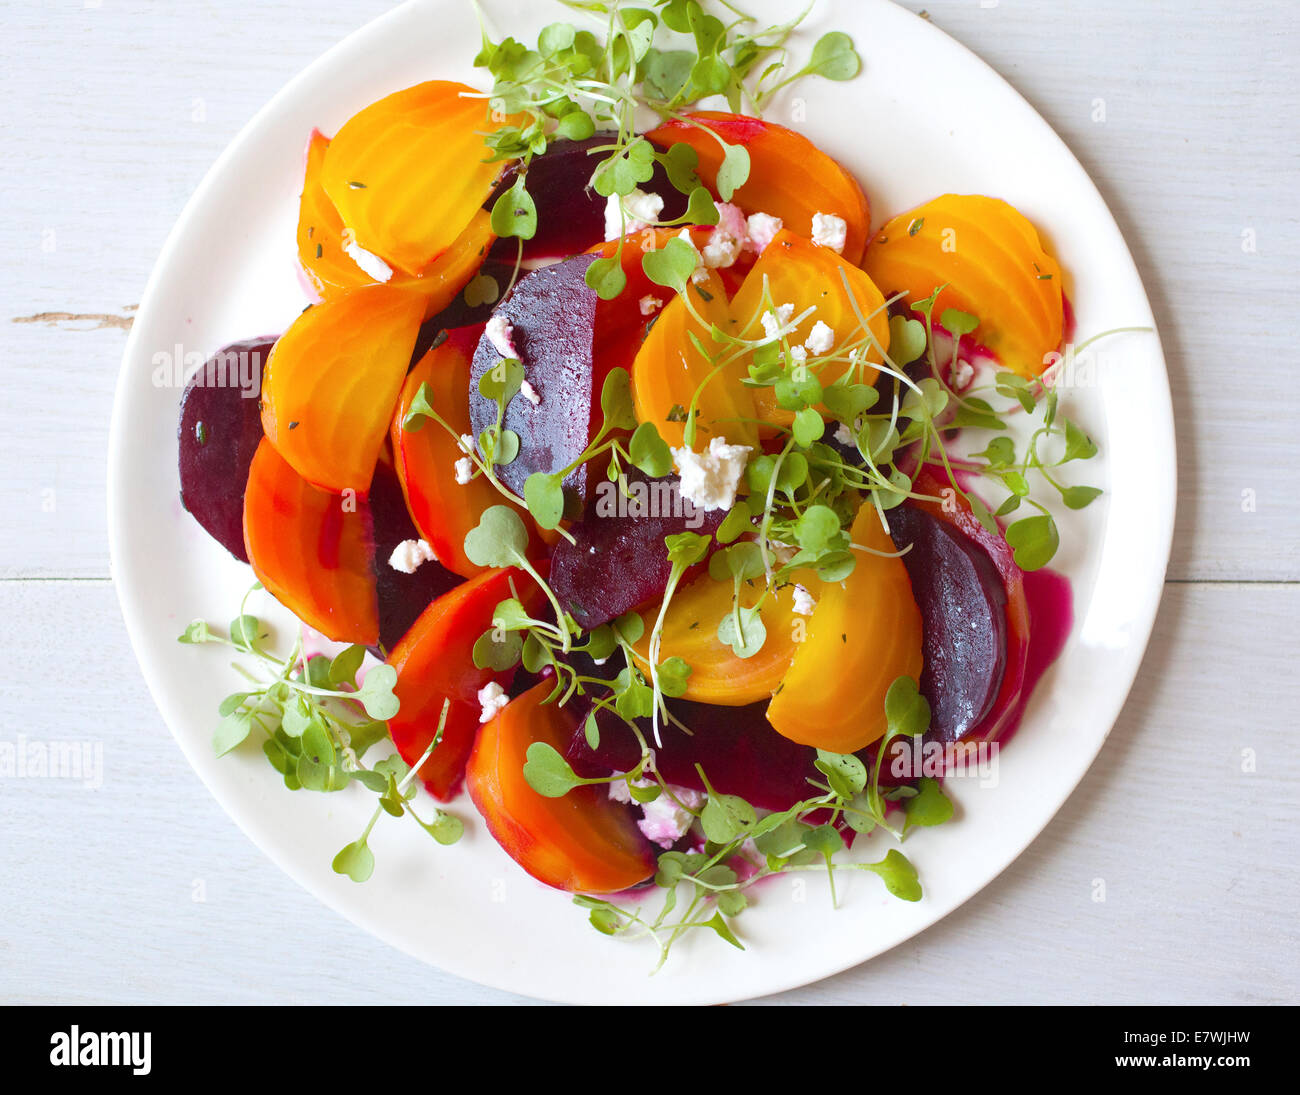 Yellow, orange, and red beet salad Stock Photo